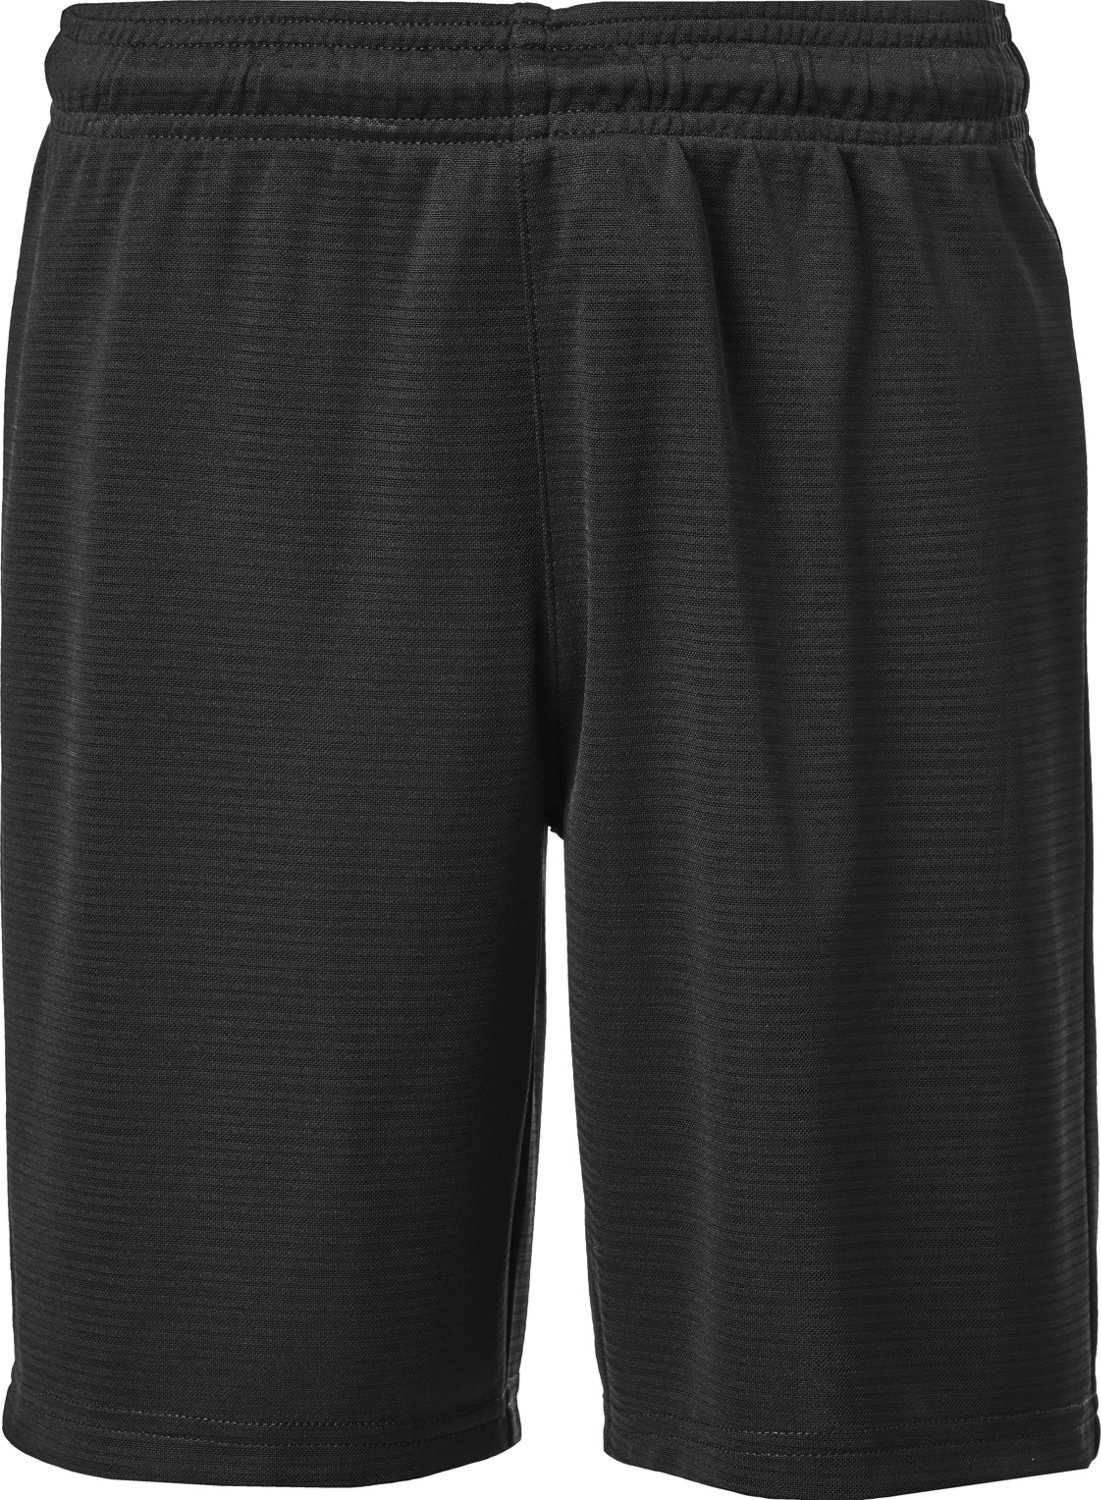 BCG Boys' Dazzle Shorts